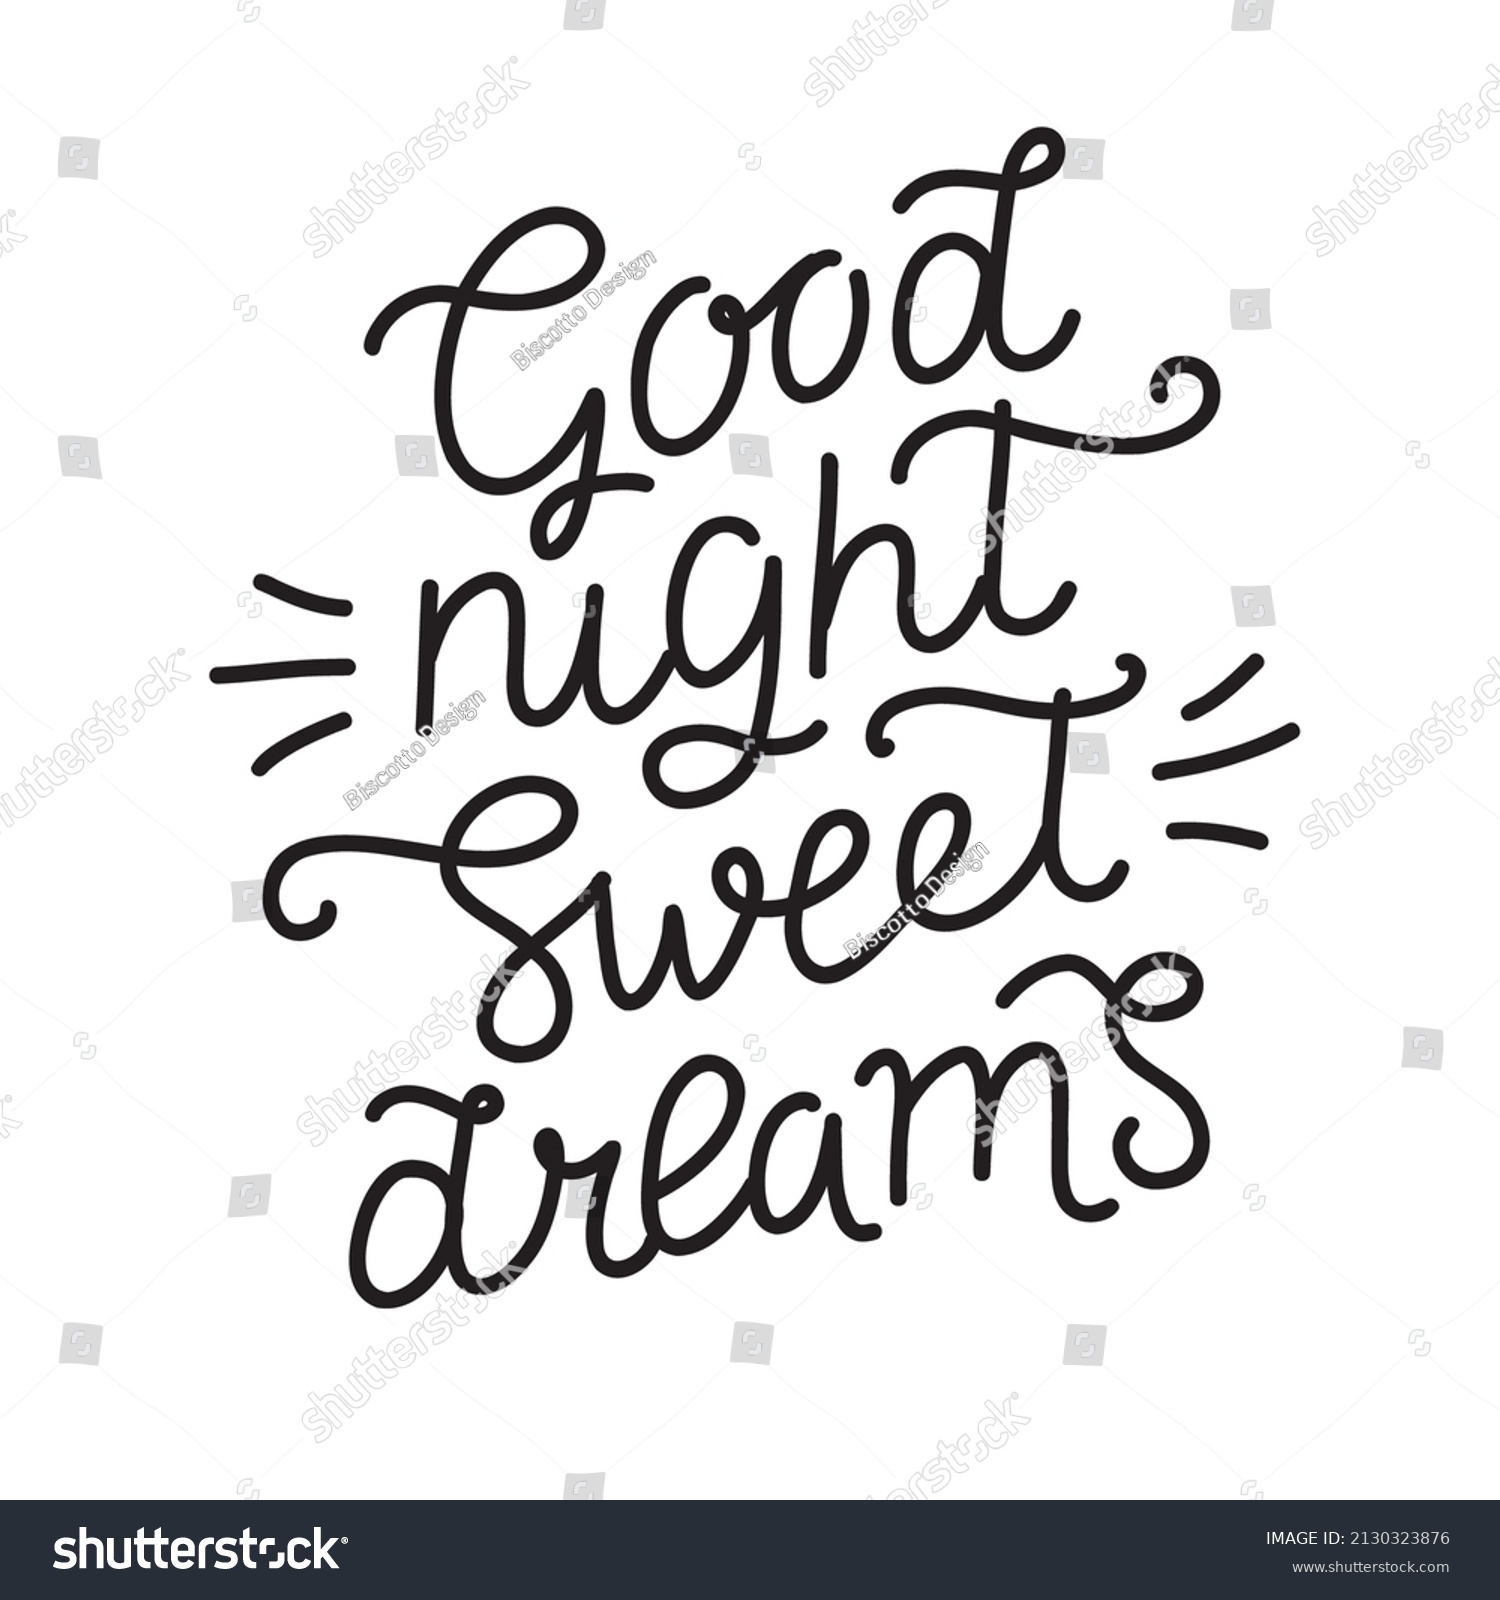 Good Night Sweet Dreams Hand Drawn Stock Vector (Royalty Free ...